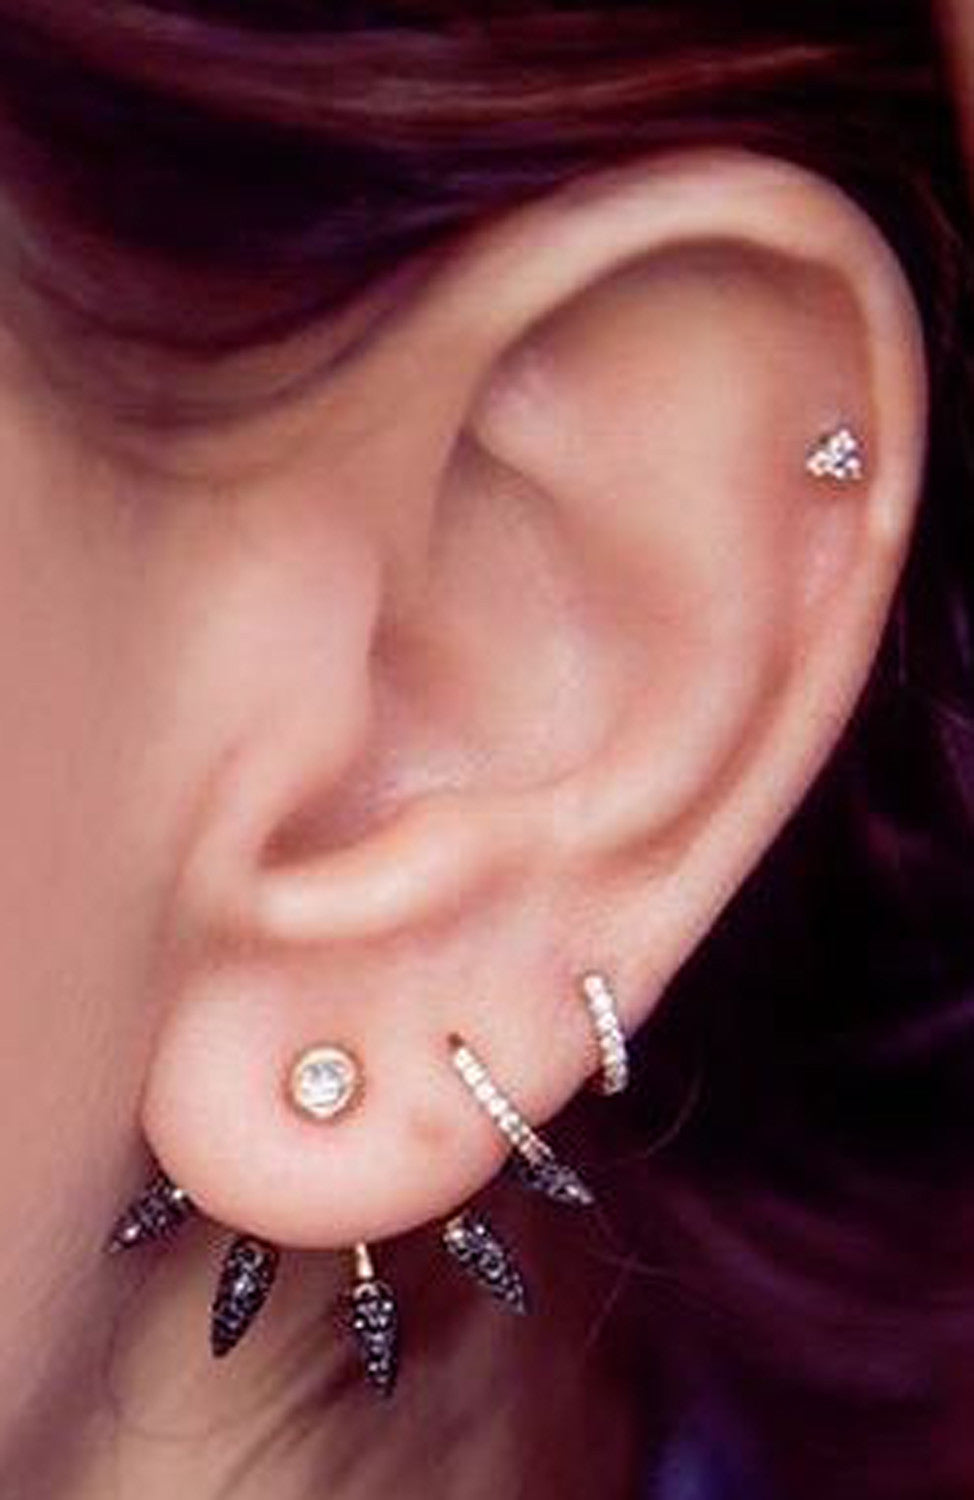 Simple Minimalistic Ear Piercing Ideas - Cool Unique Ear Jacket Earrings - Cartilage Helix Earring Jewelry Stud at MyBodiArt.com